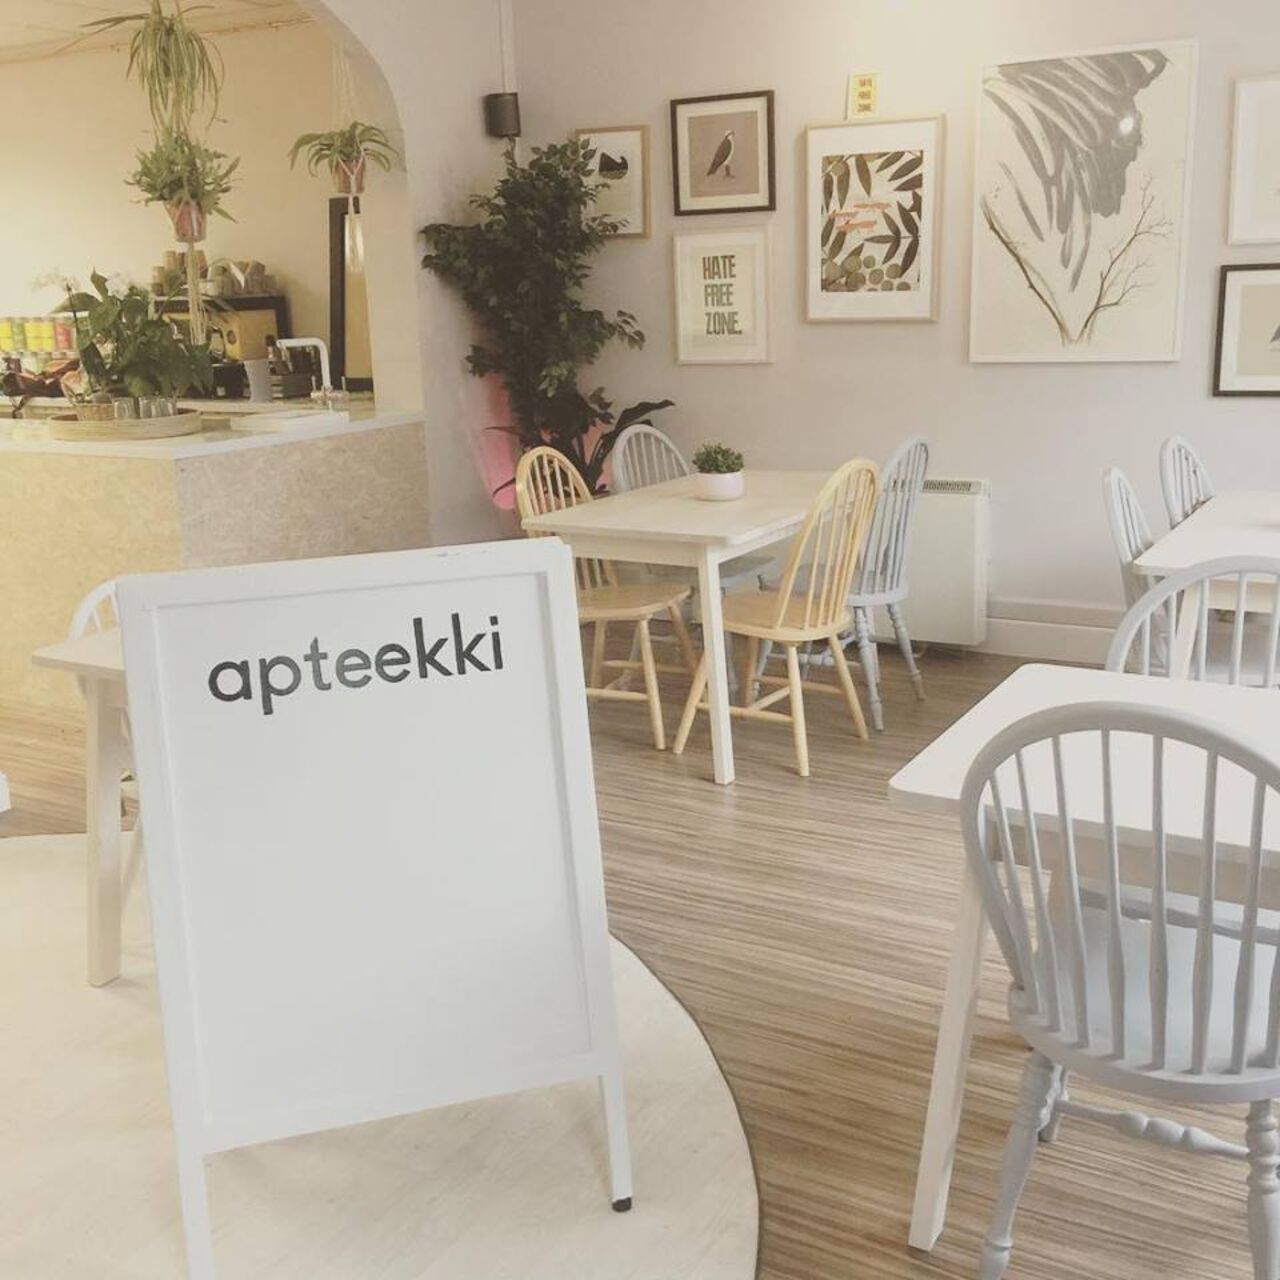 A photo of Apteekki